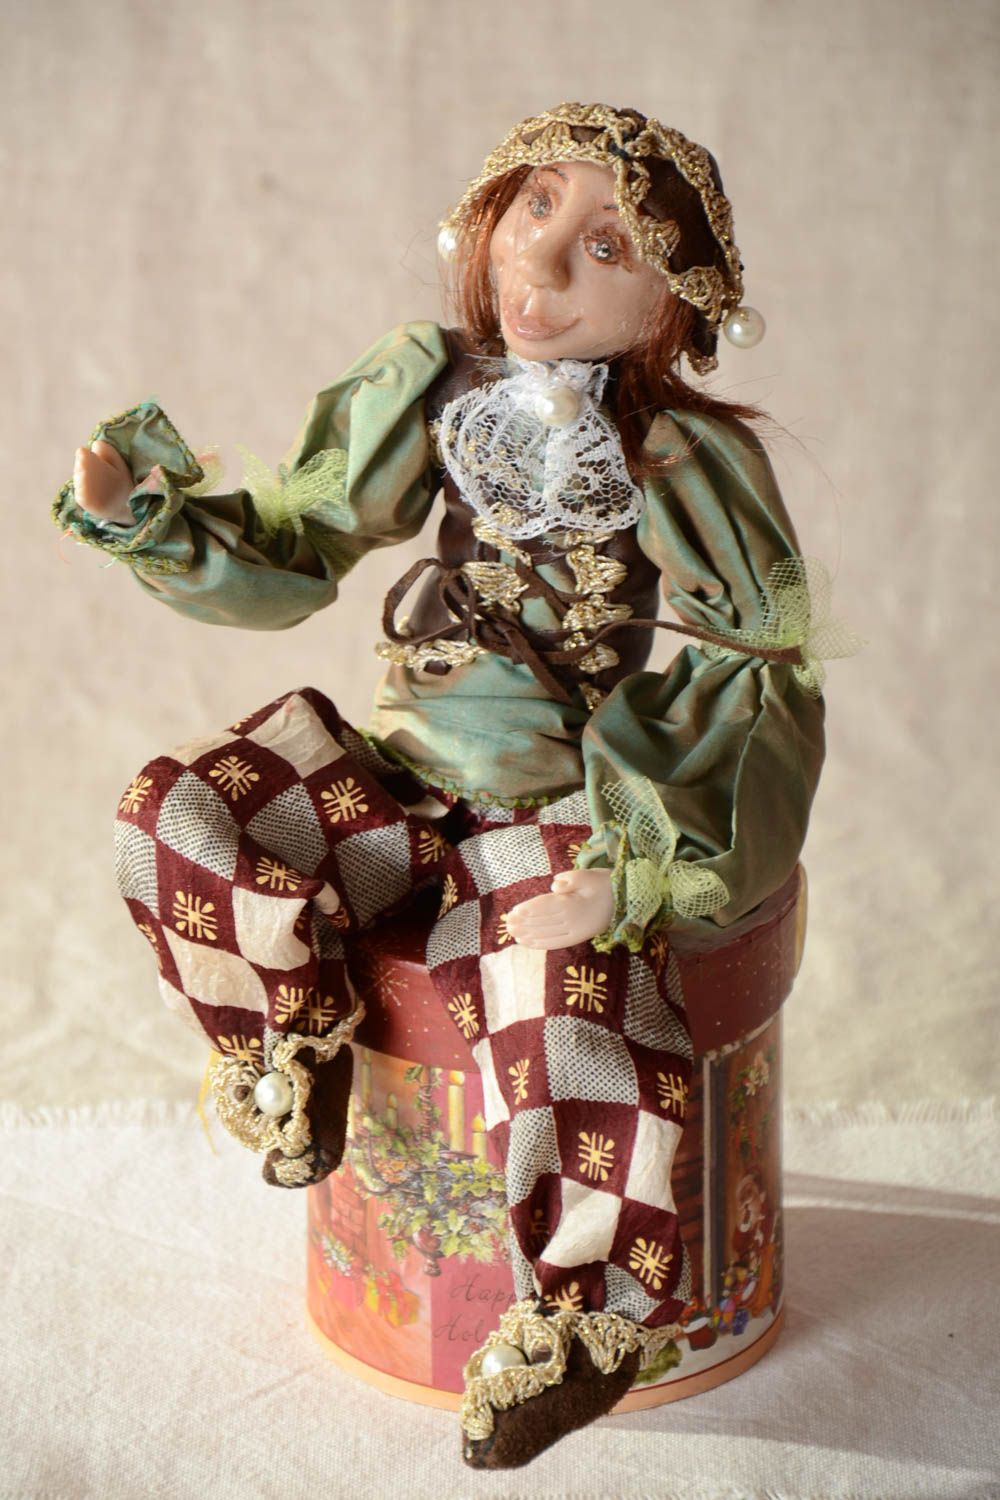 Handmade doll designer toy unusual doll gift for baby decor ideas interior doll photo 1